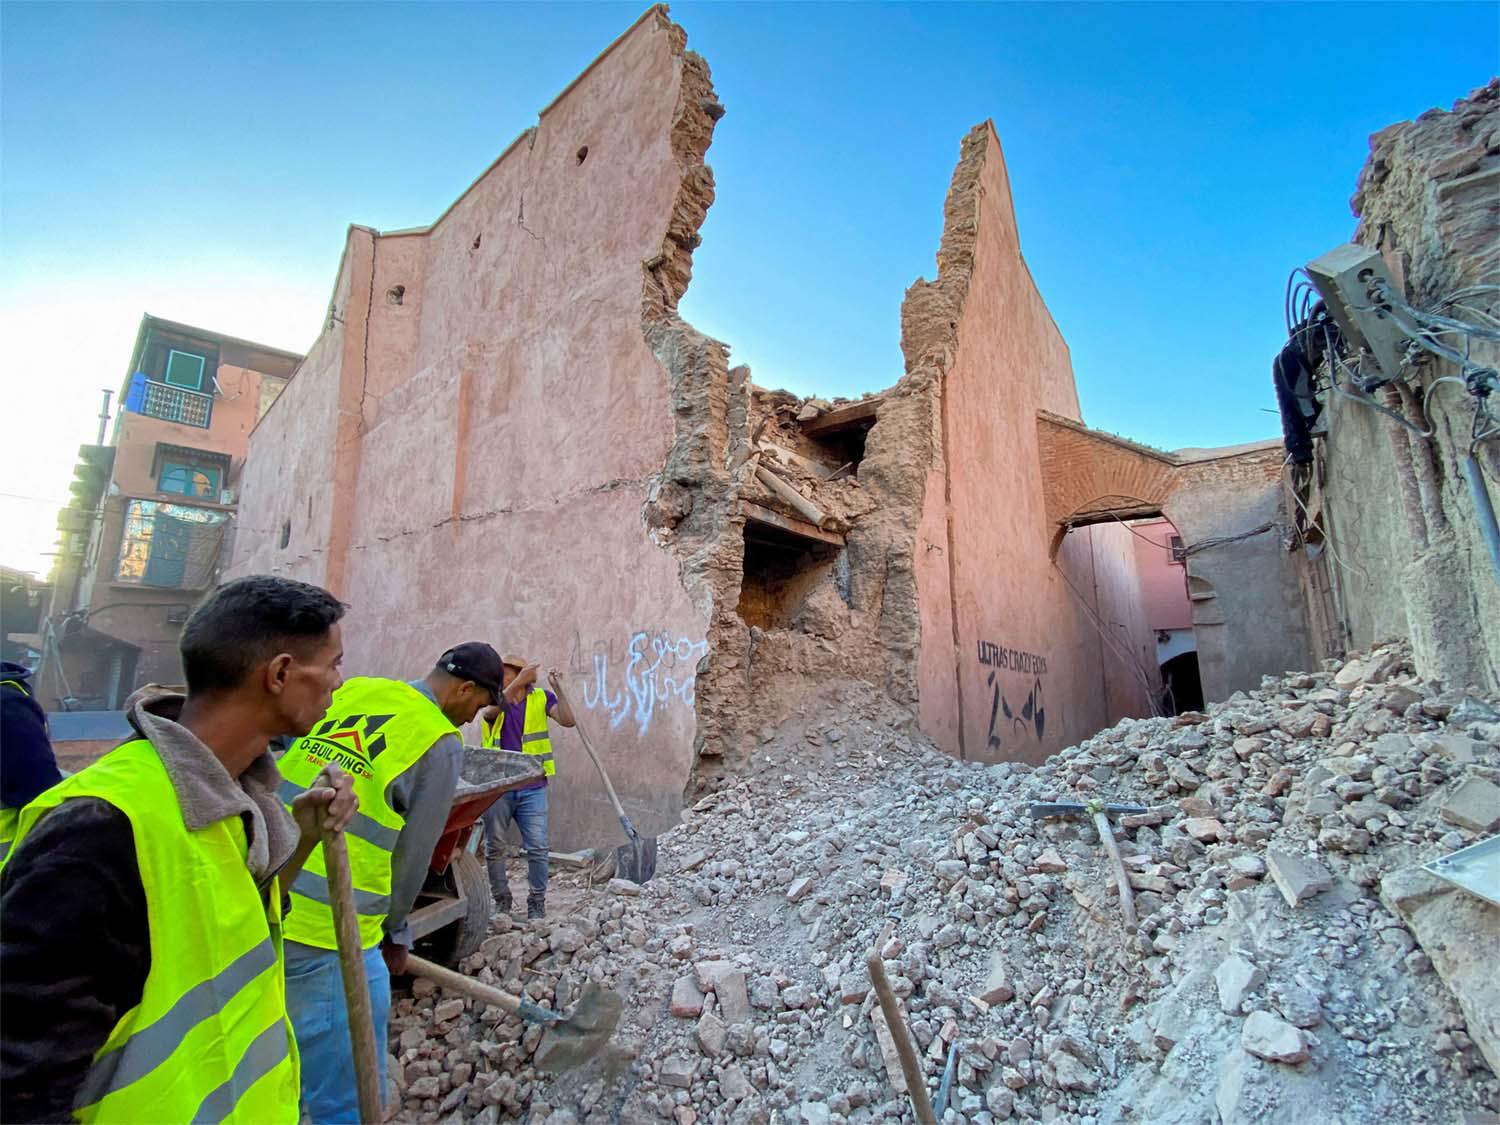 It was Morocco's deadliest earthquake since 1960